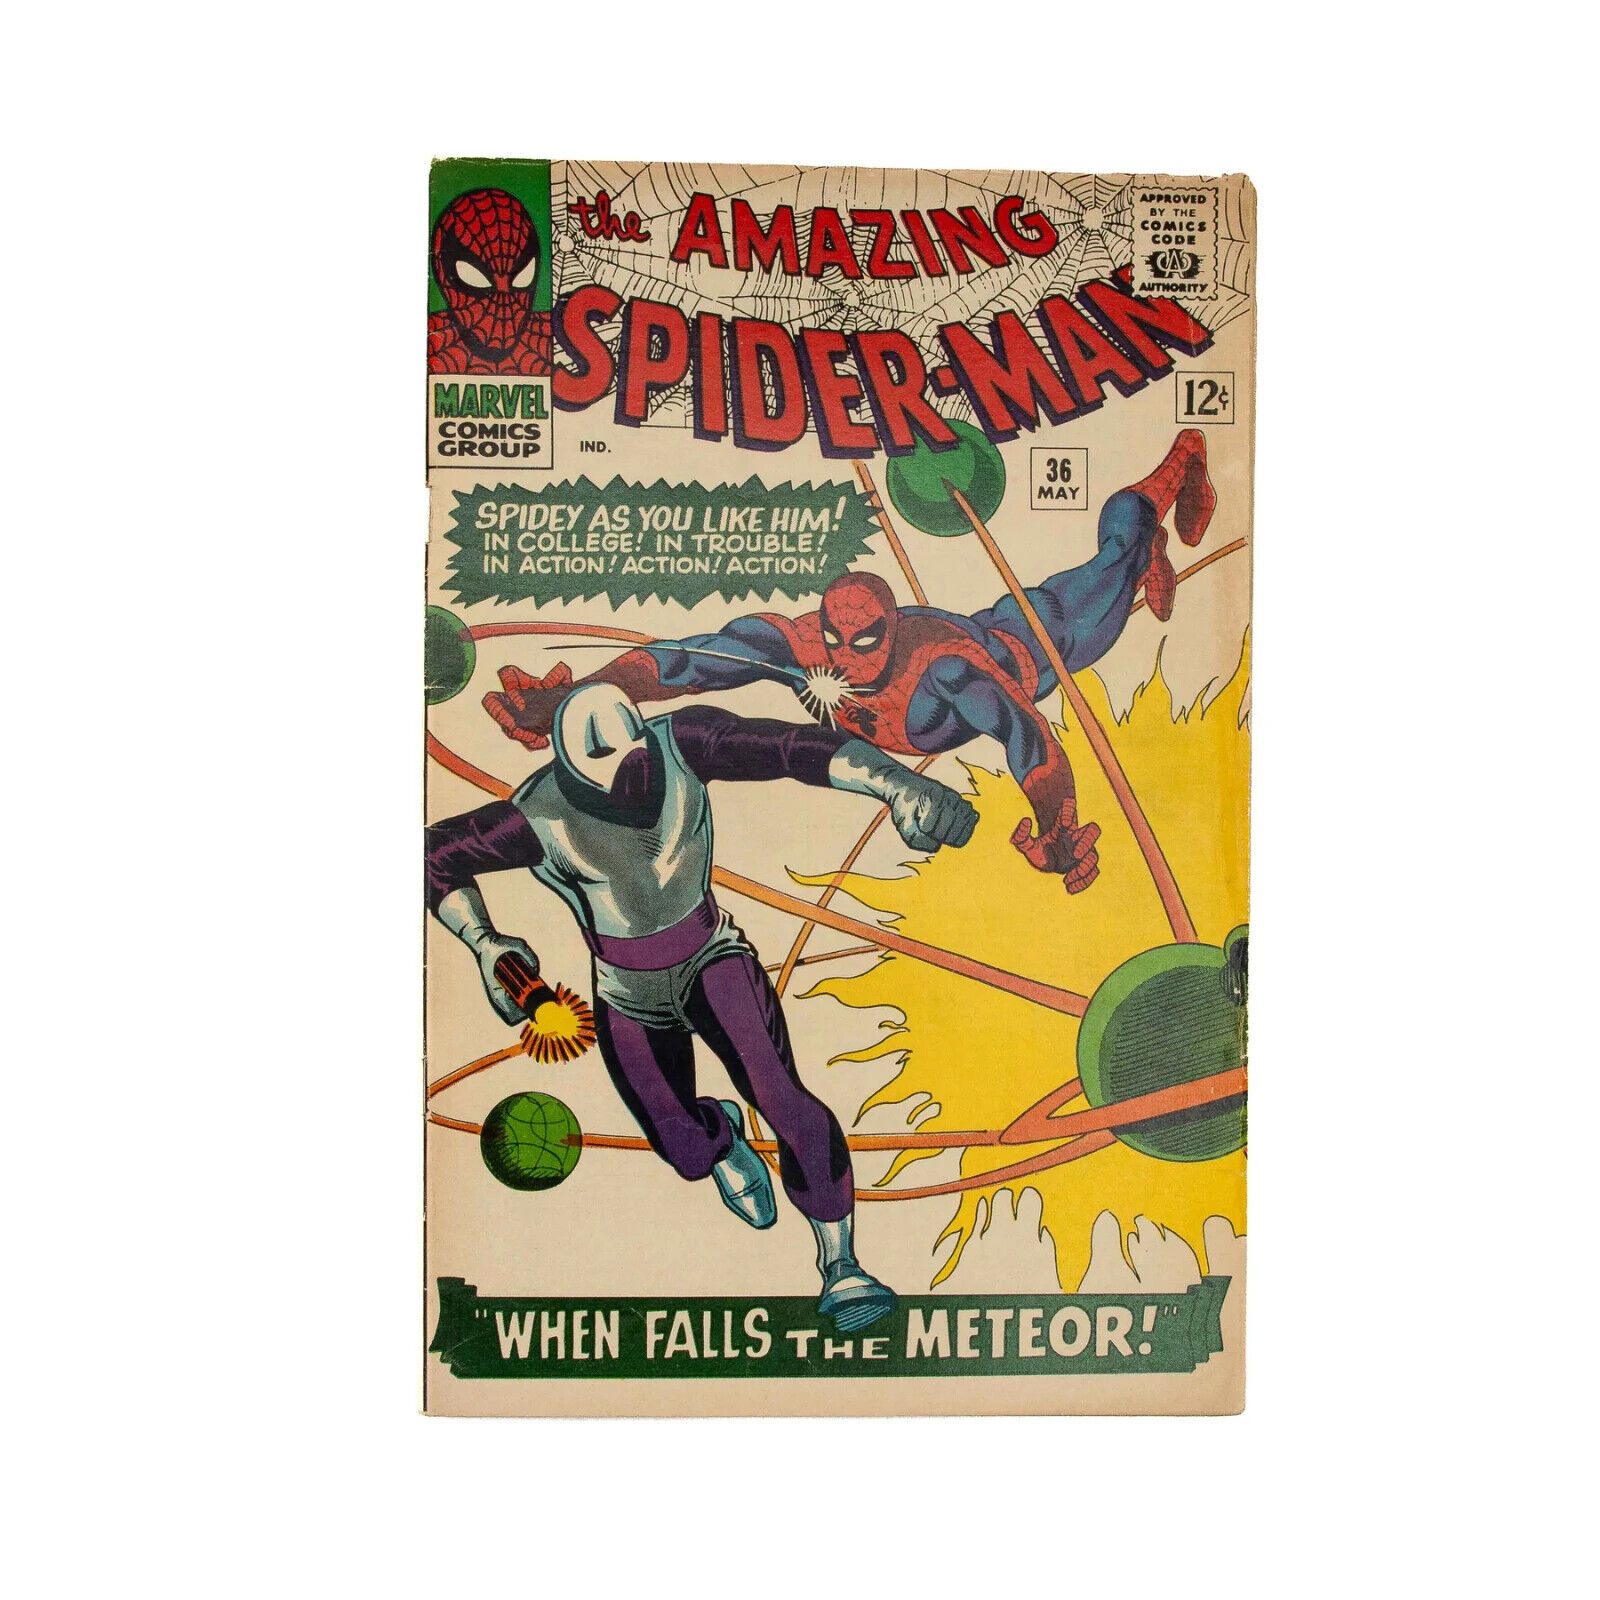 The Amazing Spider-Man #36, 